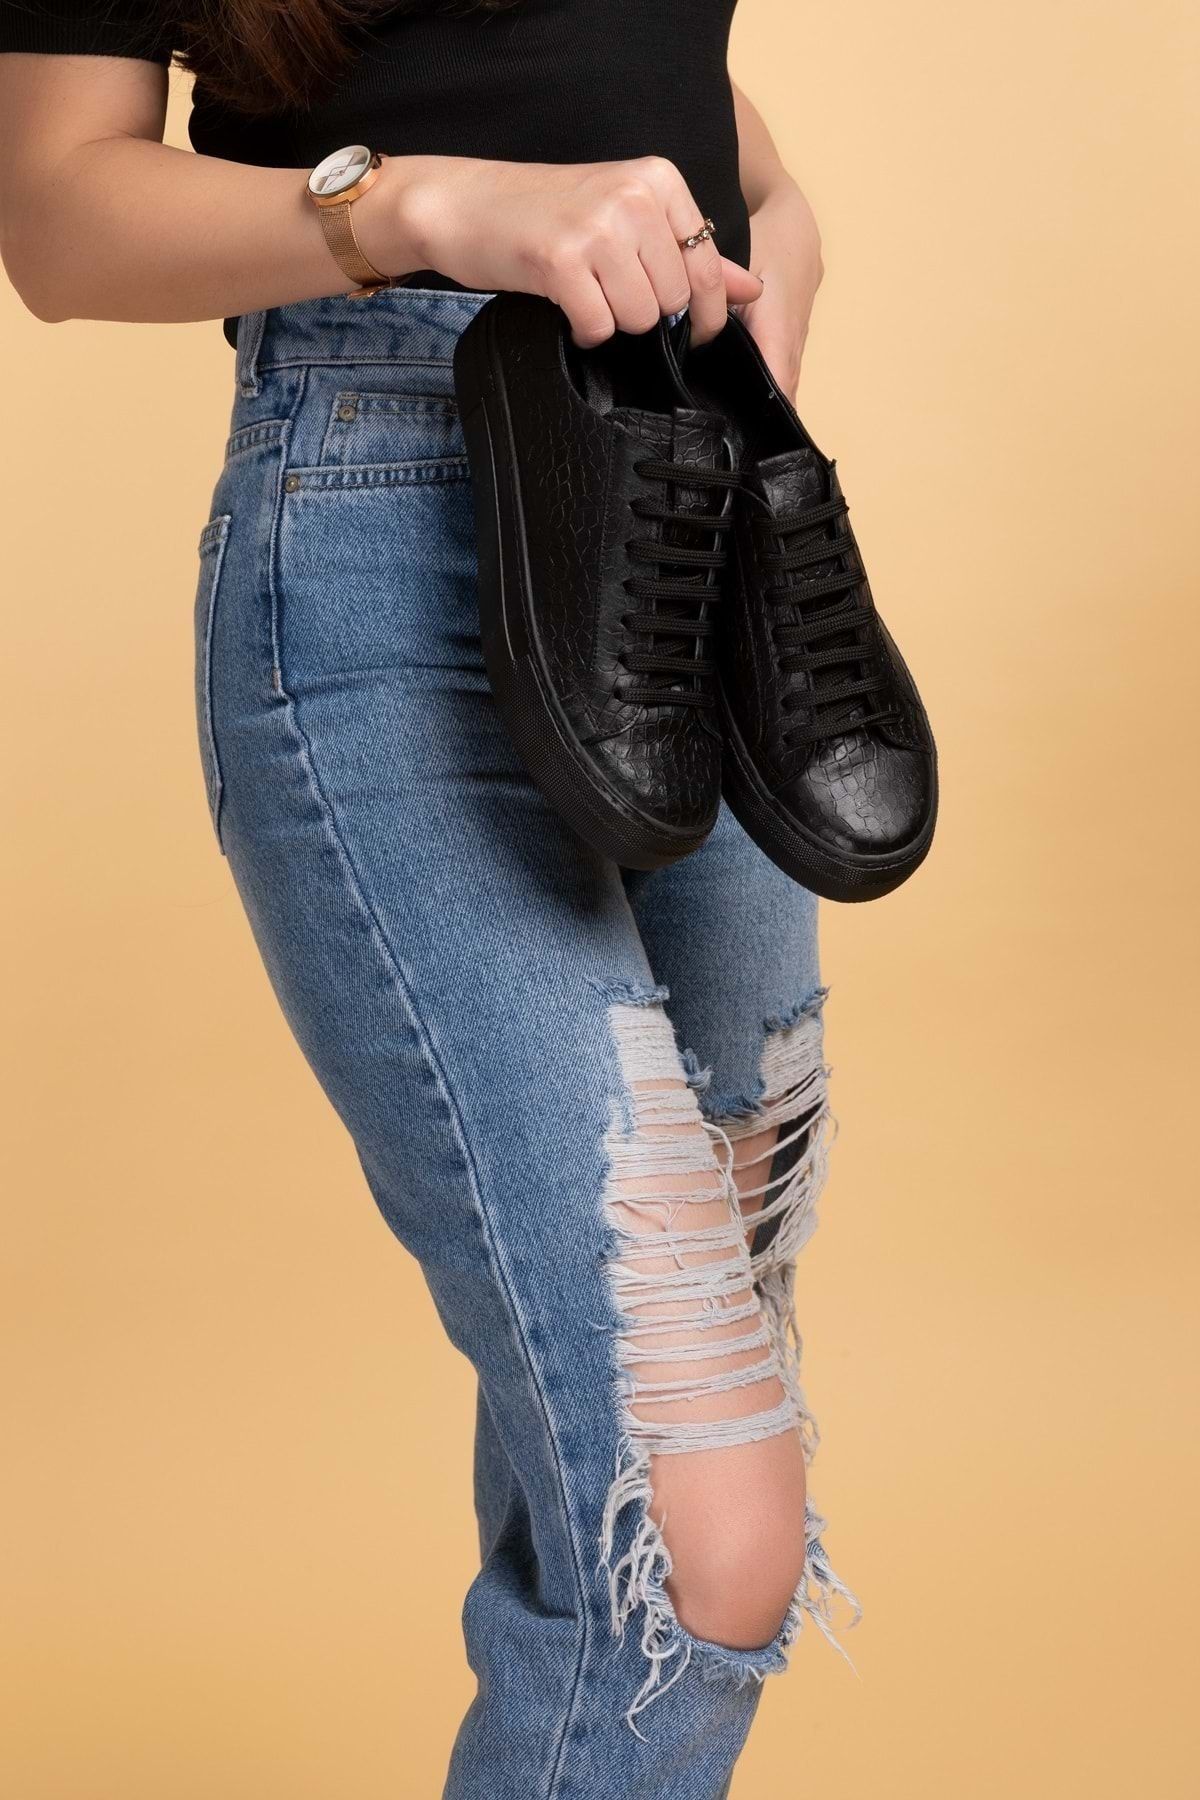 Gondol Hakiki Deri Anatomik Taban Spor Ayakkabı Siyah Croco